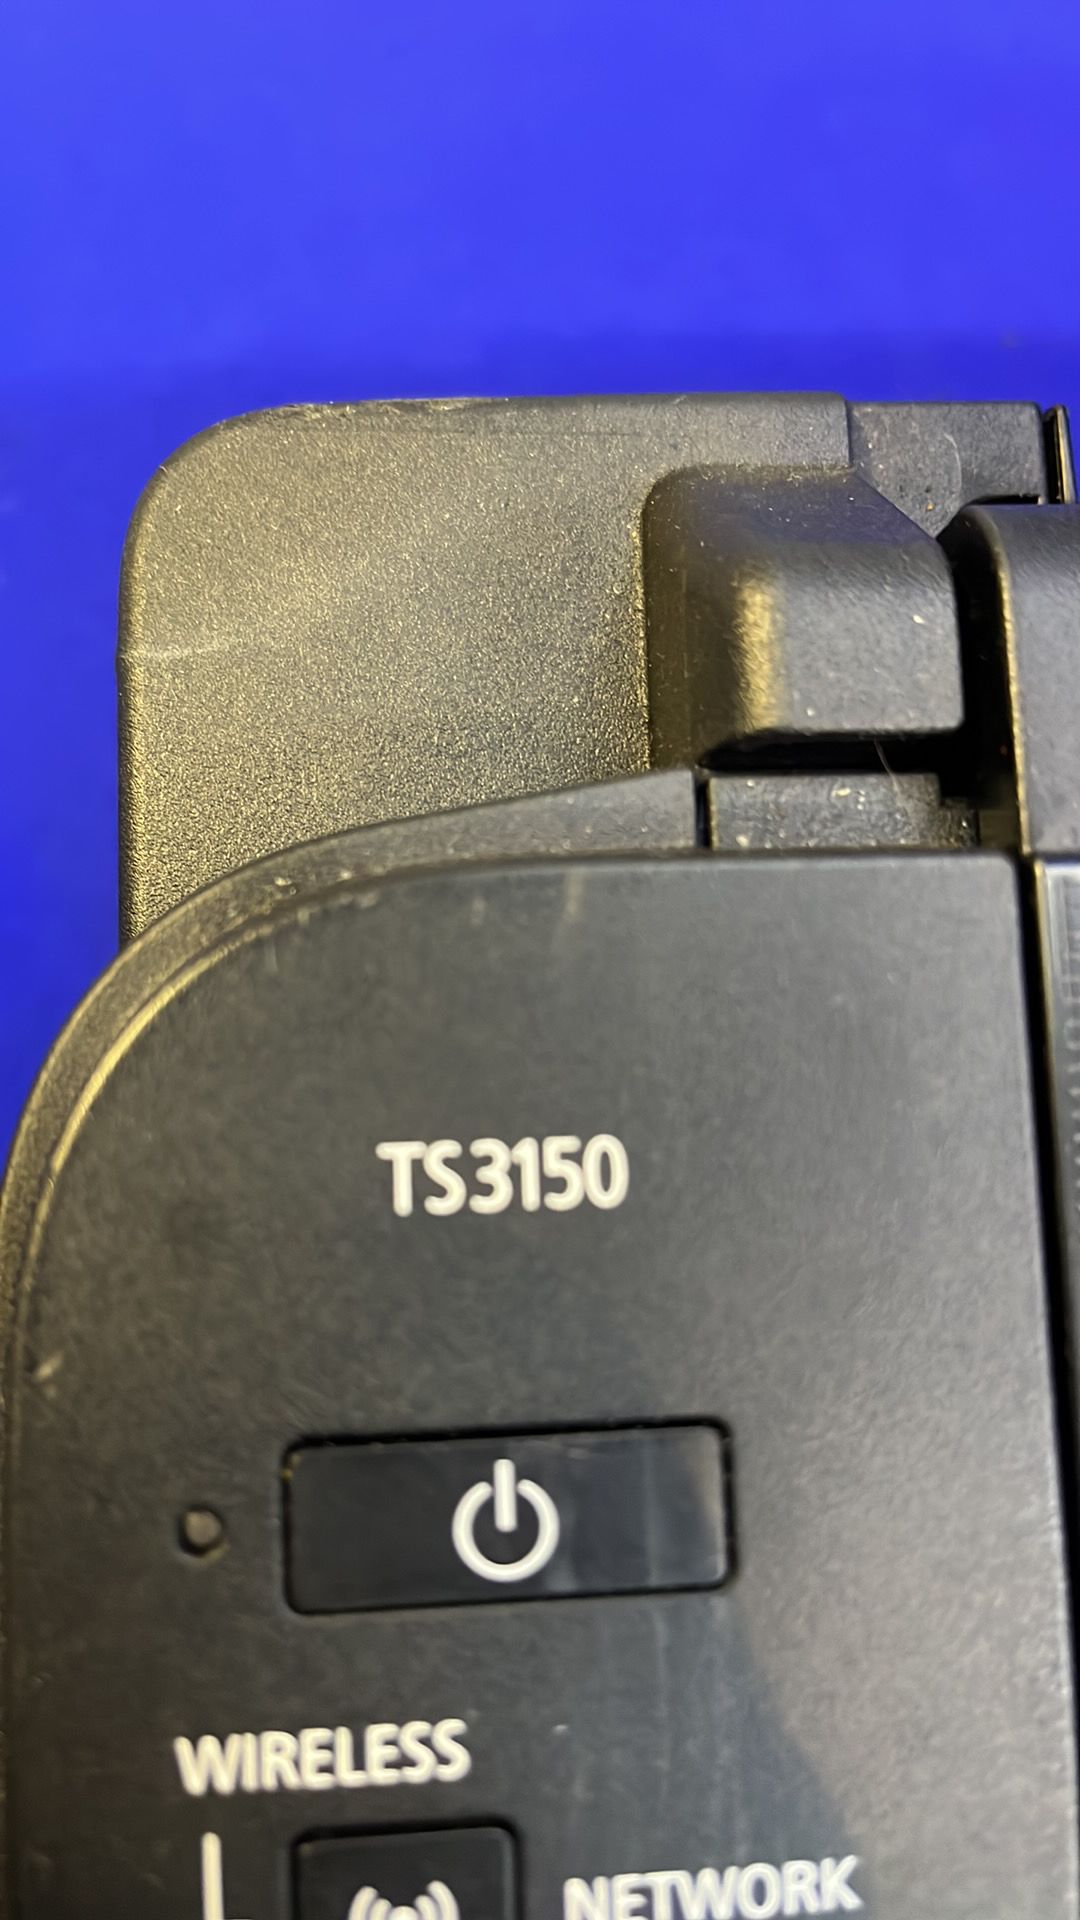 Cannon TS3150 Laserjet Printer - Image 4 of 4